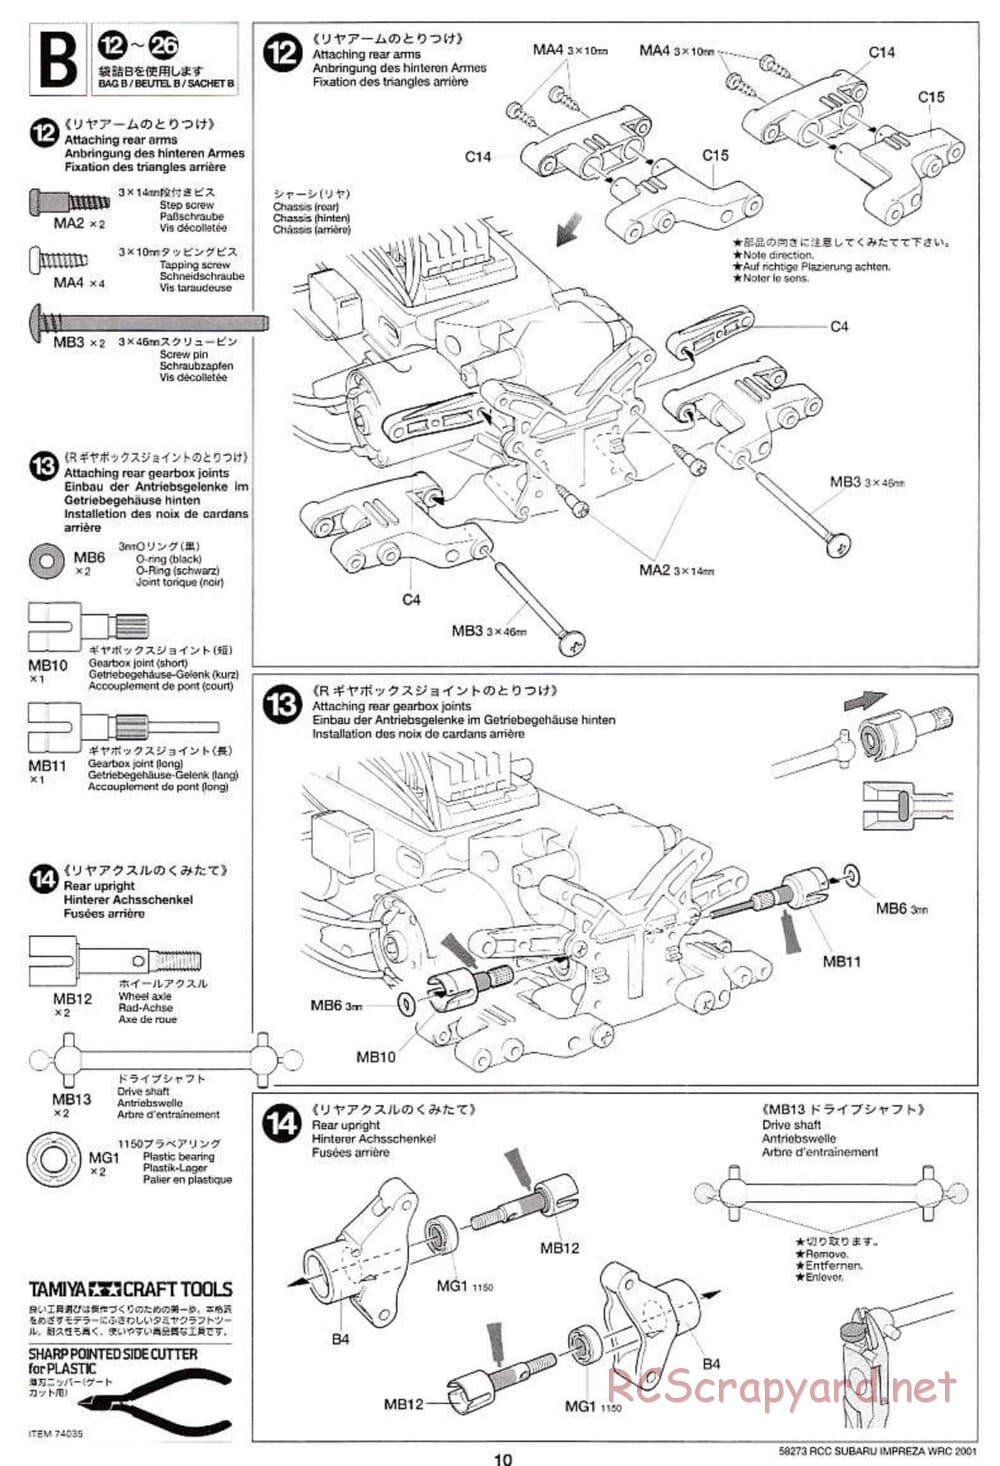 Tamiya - Subaru Impreza WRC 2001 - TL-01 Chassis - Manual - Page 10